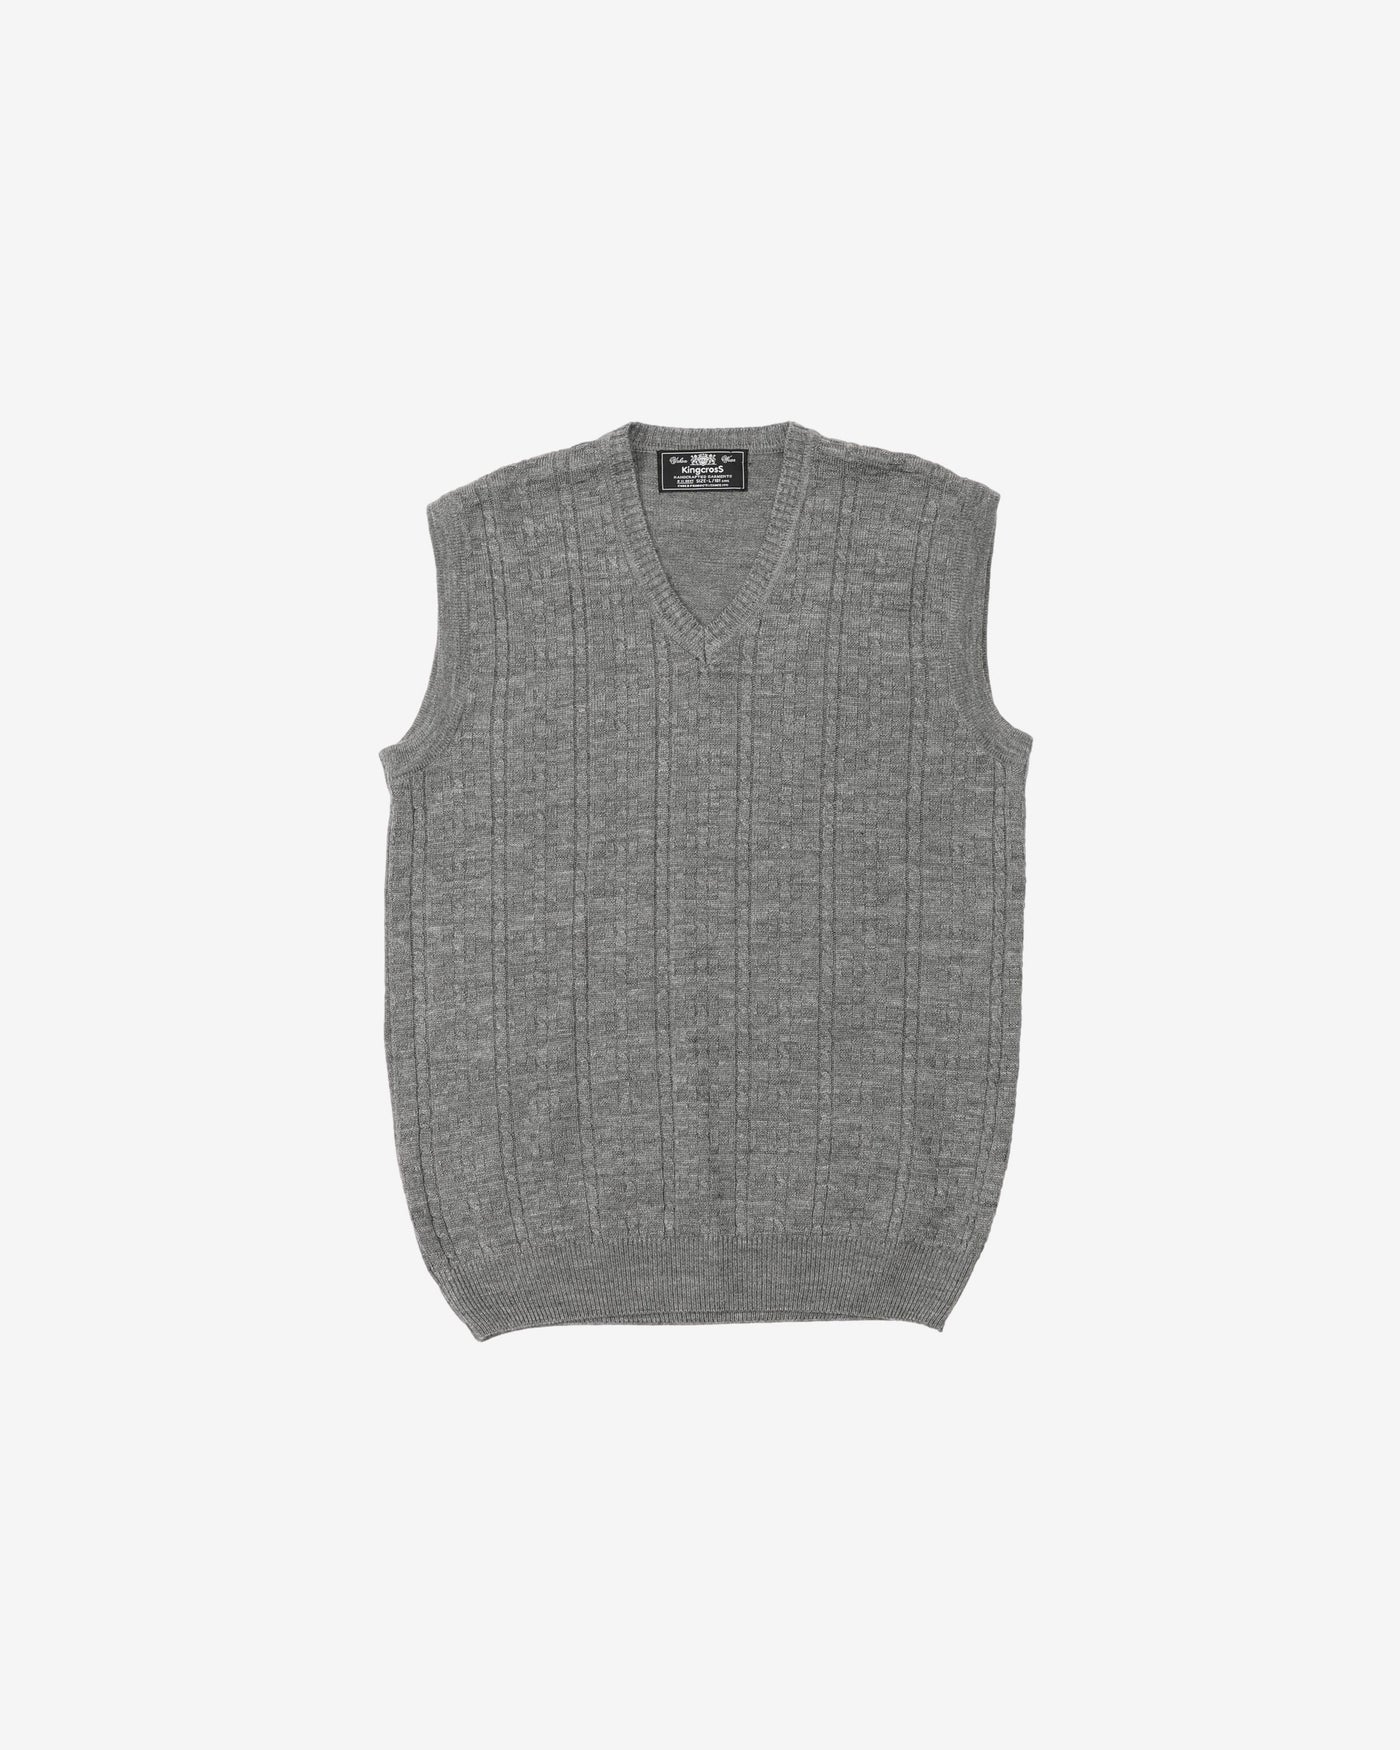 Vintage 80s Grey Patterned Sleeveless Sweater Vest - L